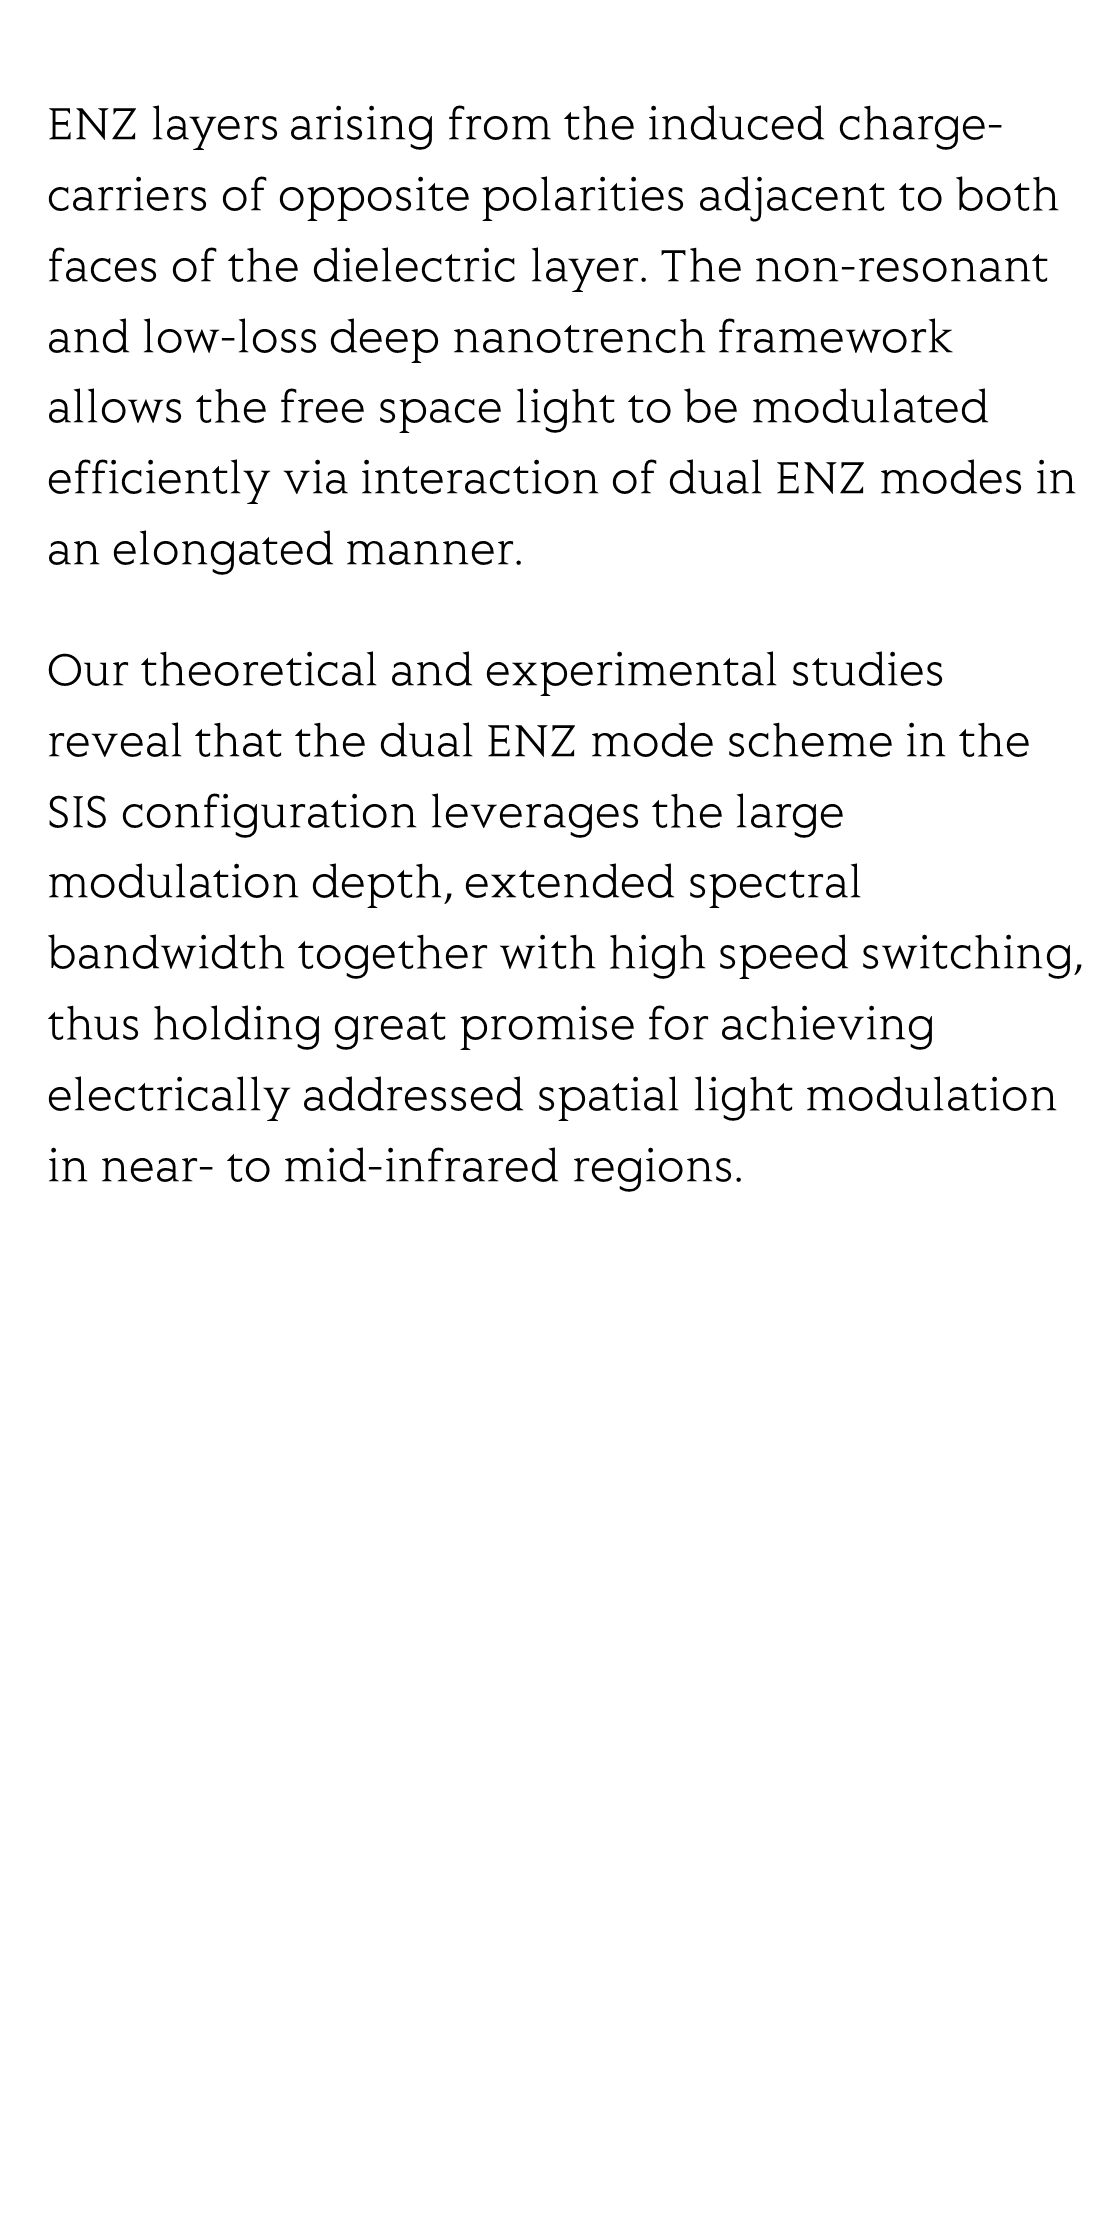 Broad-band spatial light modulation with dual epsilon-near-zero modes_3